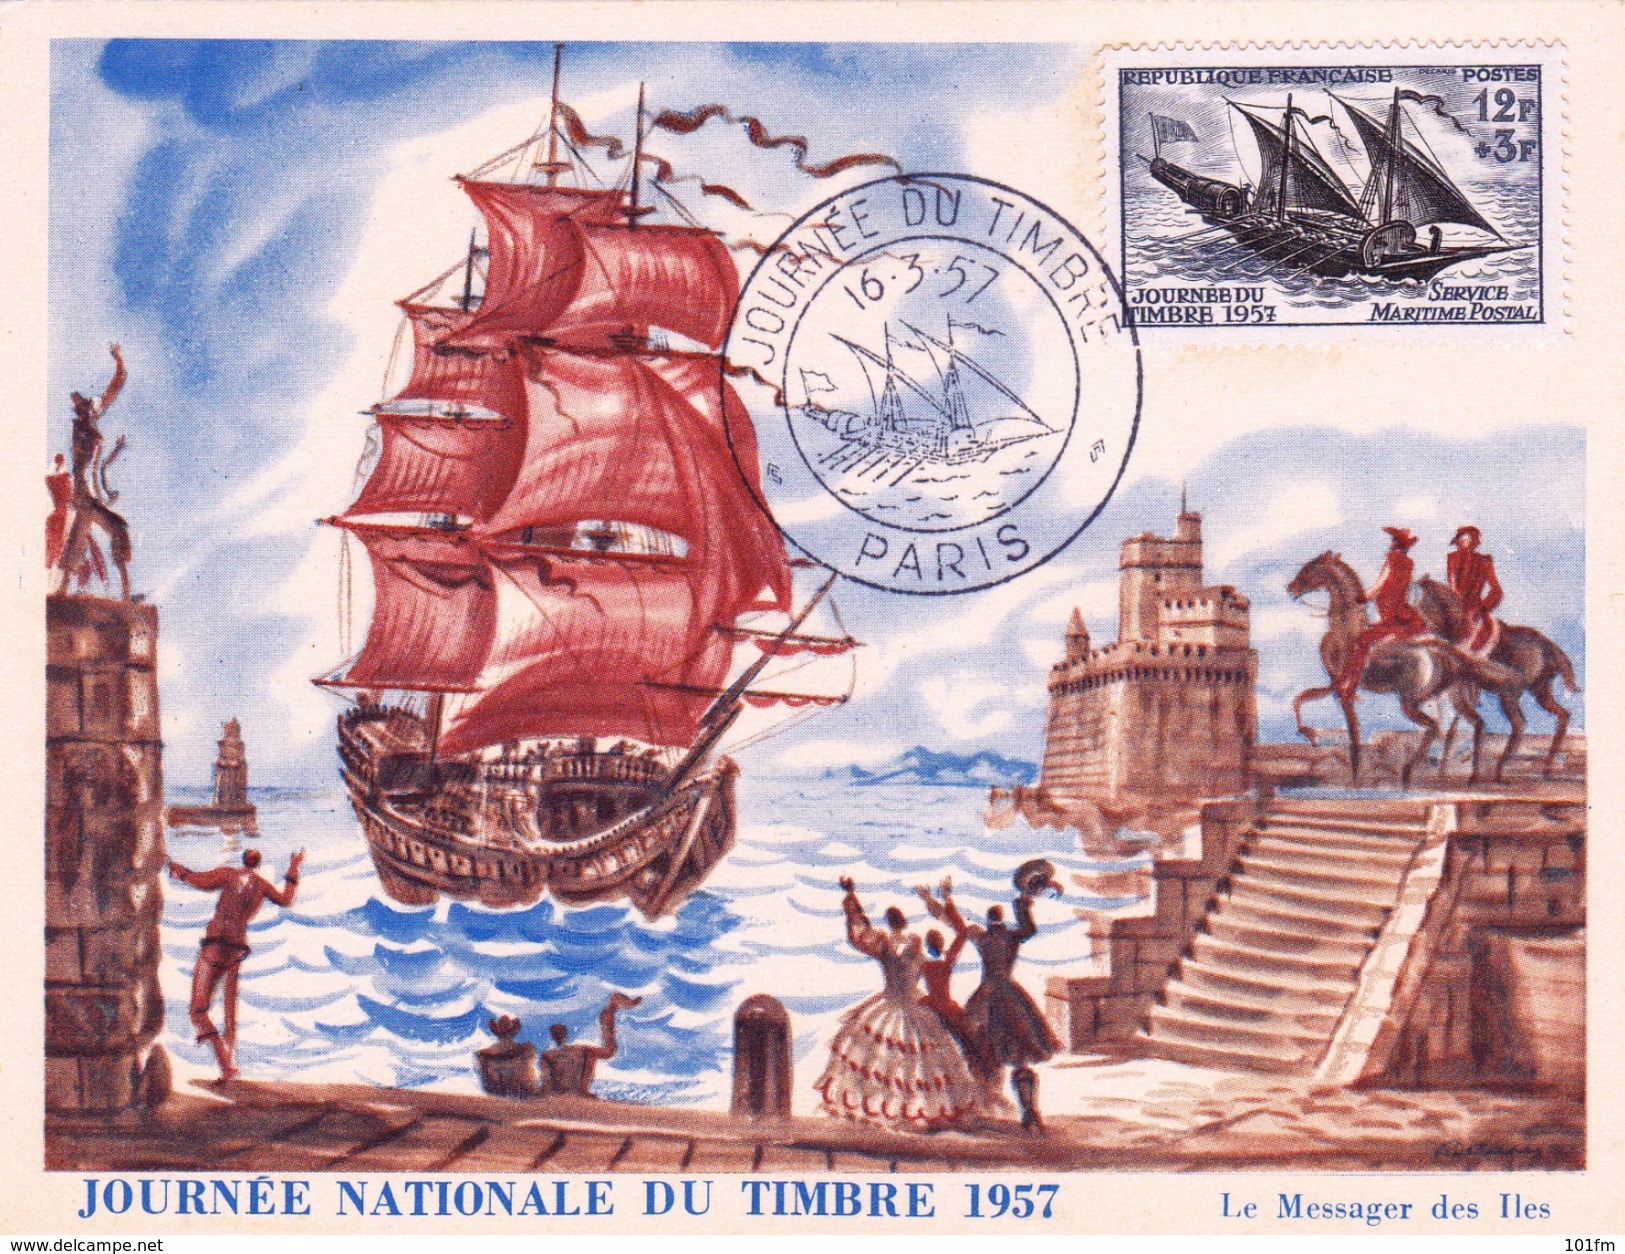 JOURNEE NATIONALE DU TIMBRE 1957 - Maritime